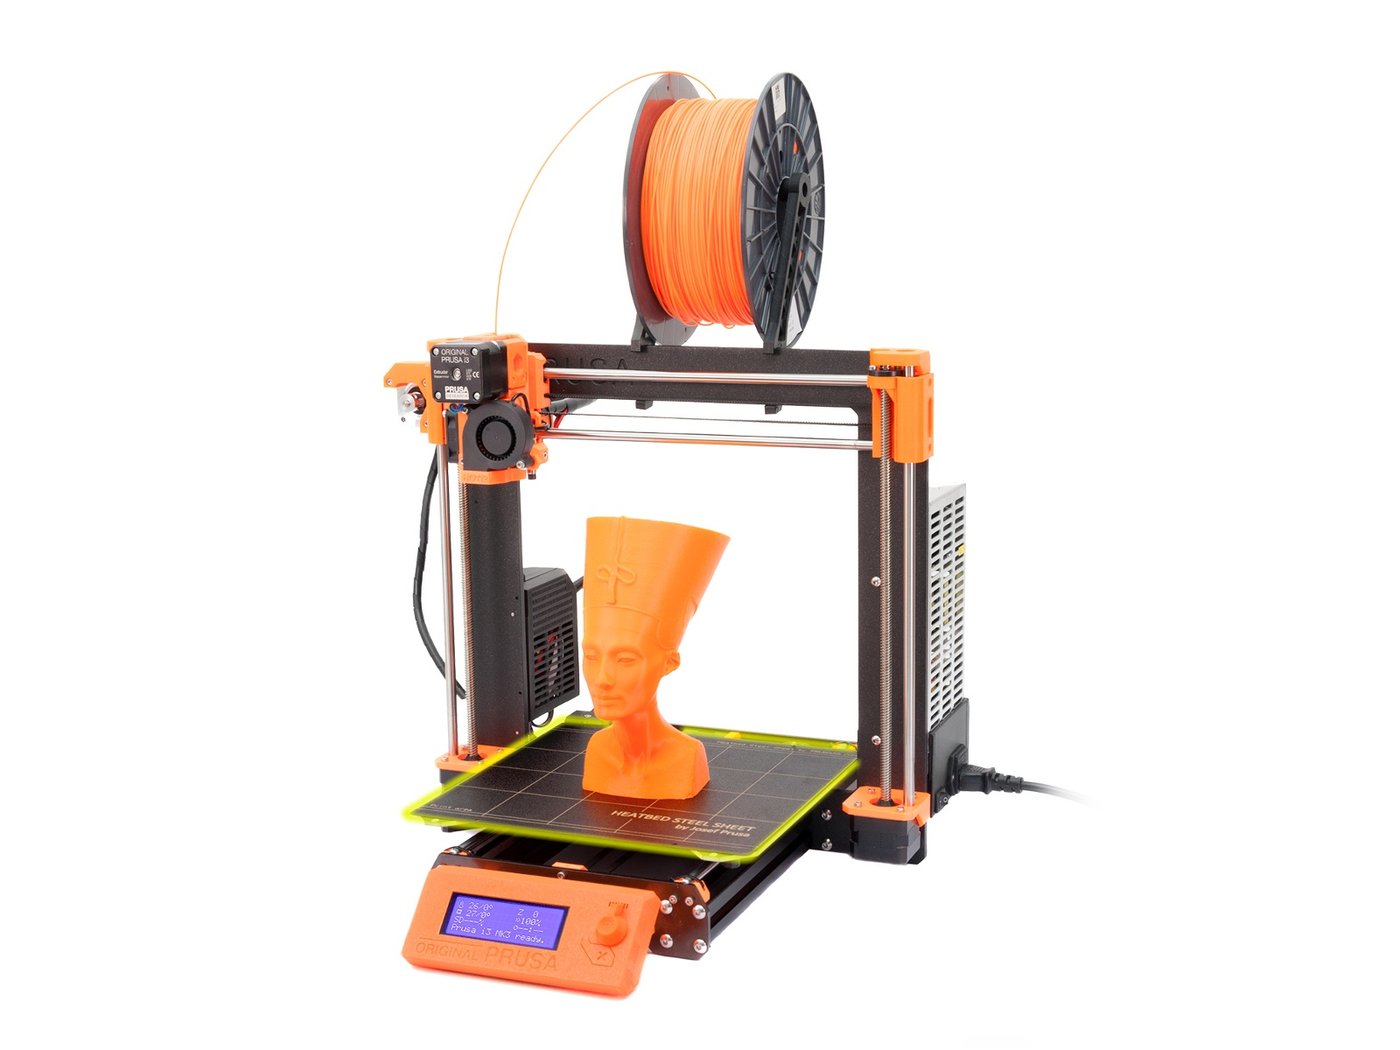 The Prusa 3D Printer